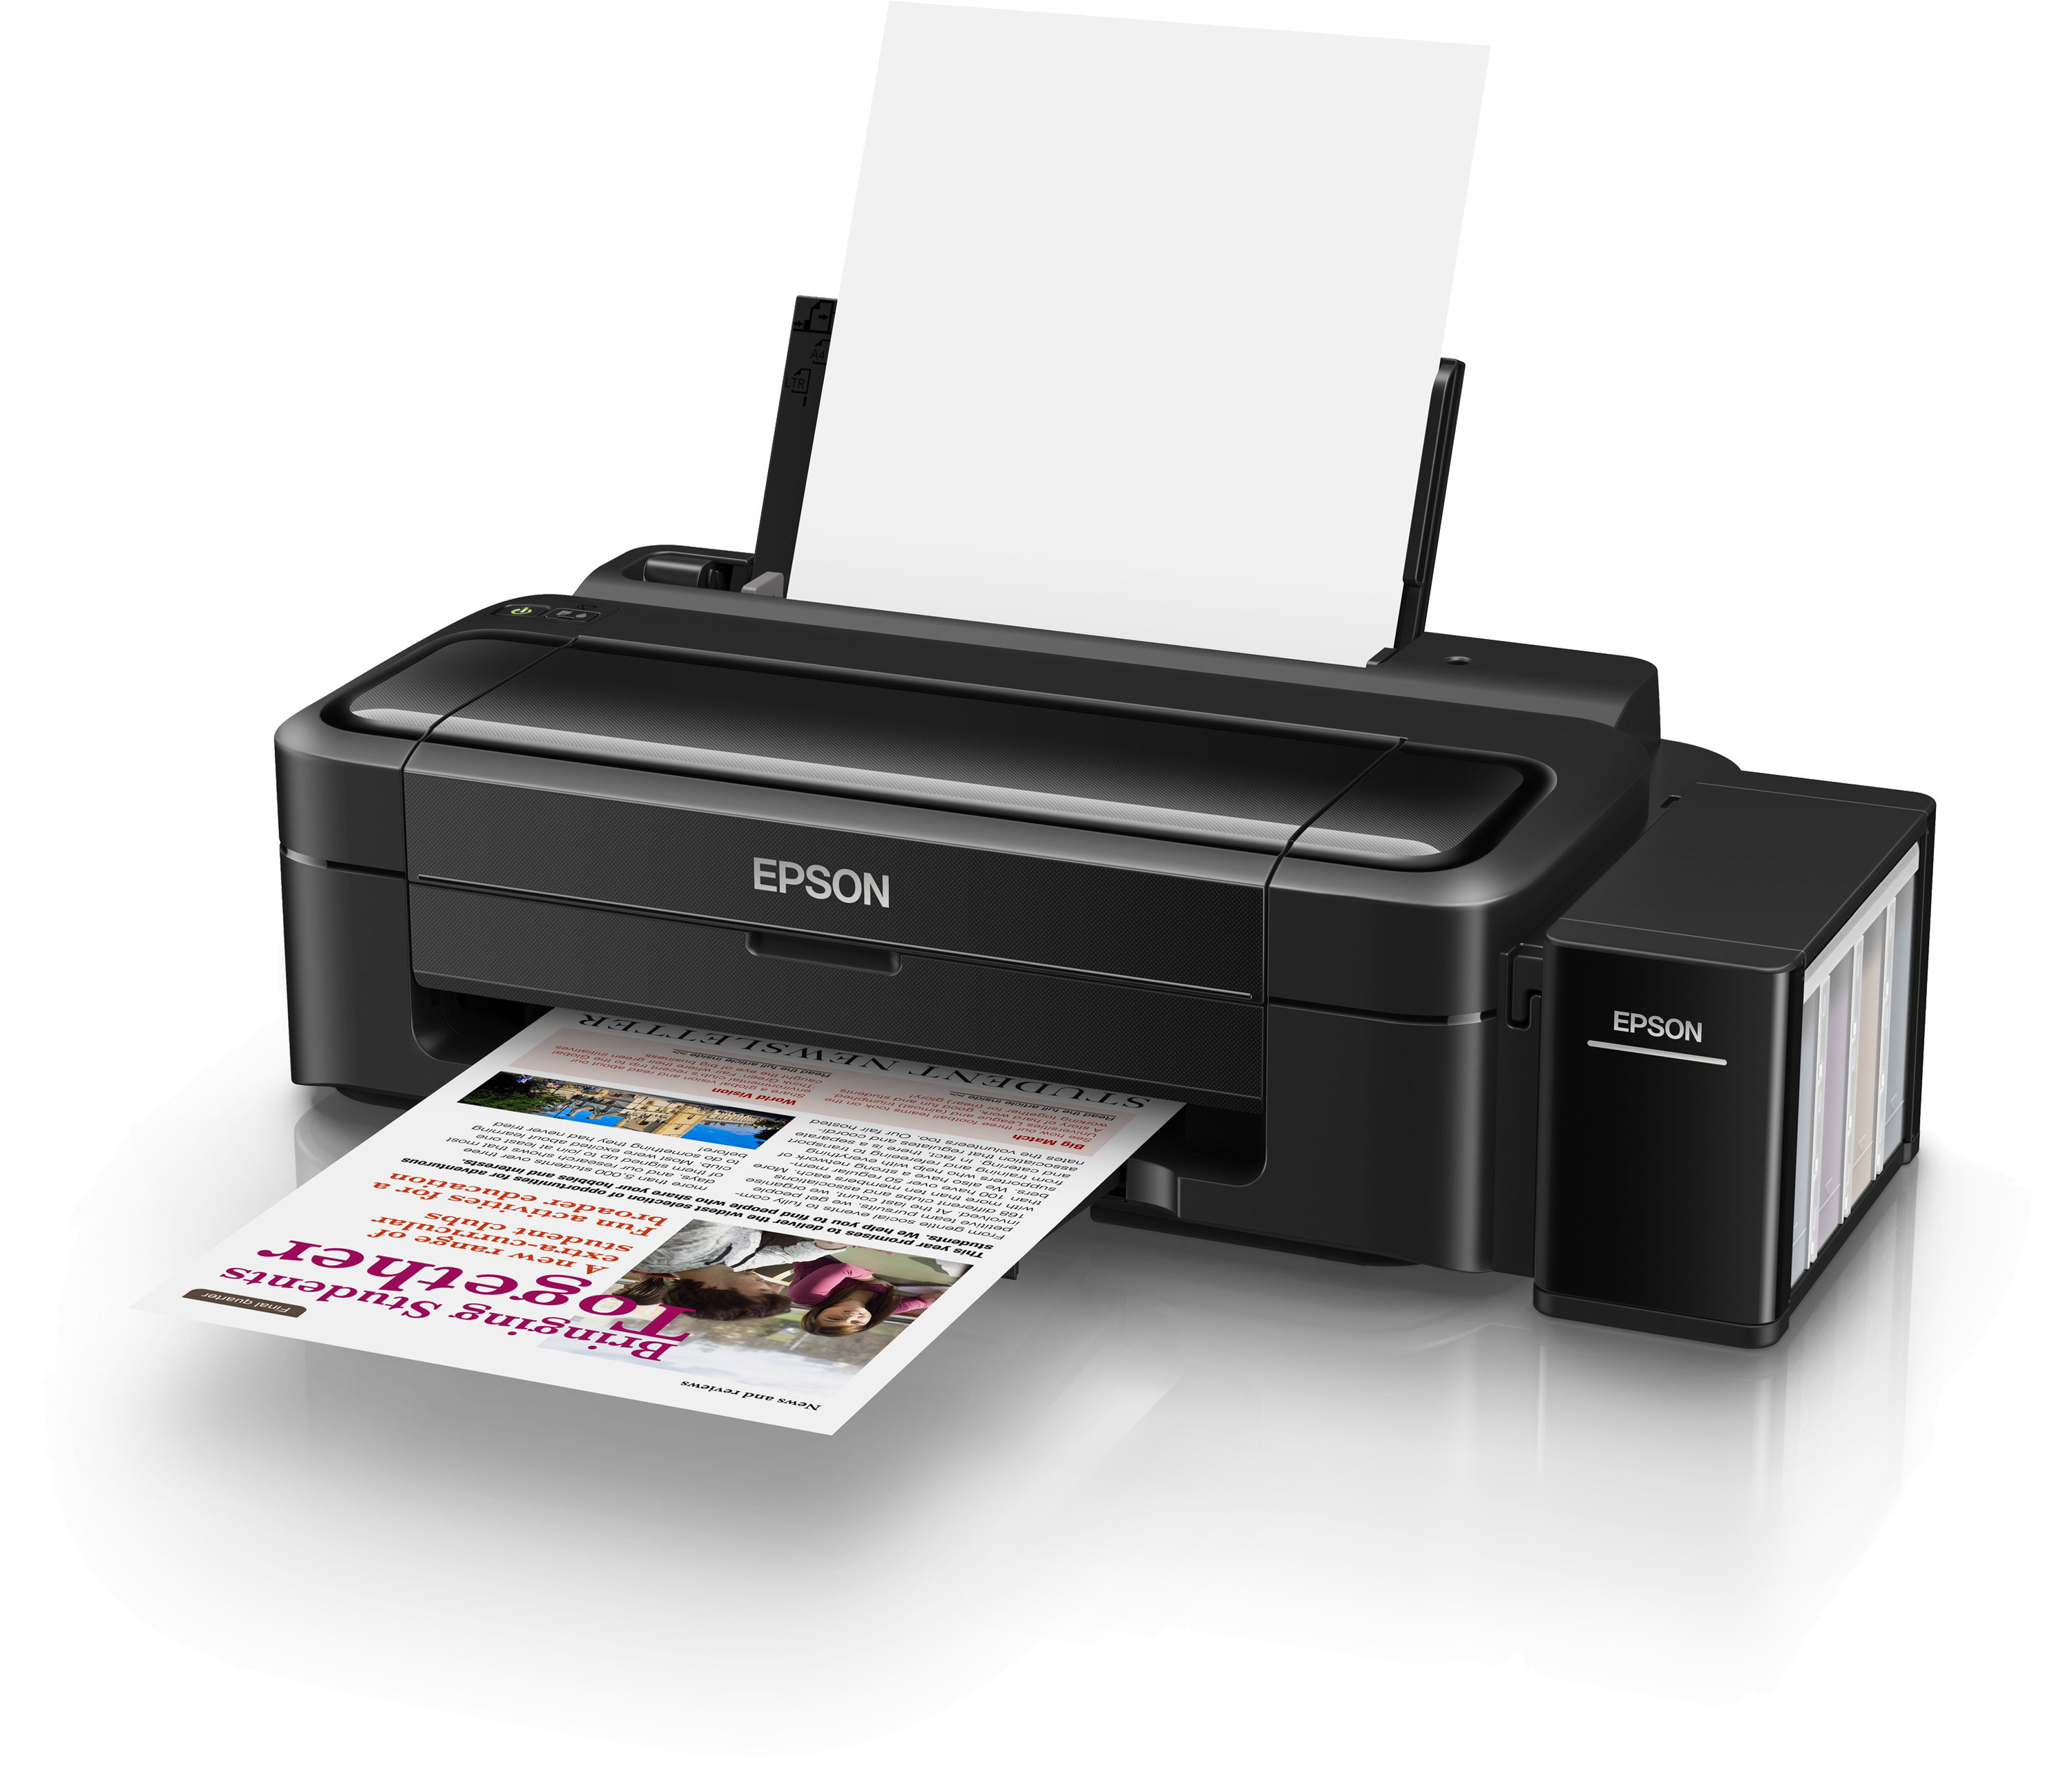 Купить принтер видео. Принтер Эпсон l132. Принтер Epson l3100. Принтер струйный Epson l132. Принтер Epson l110.